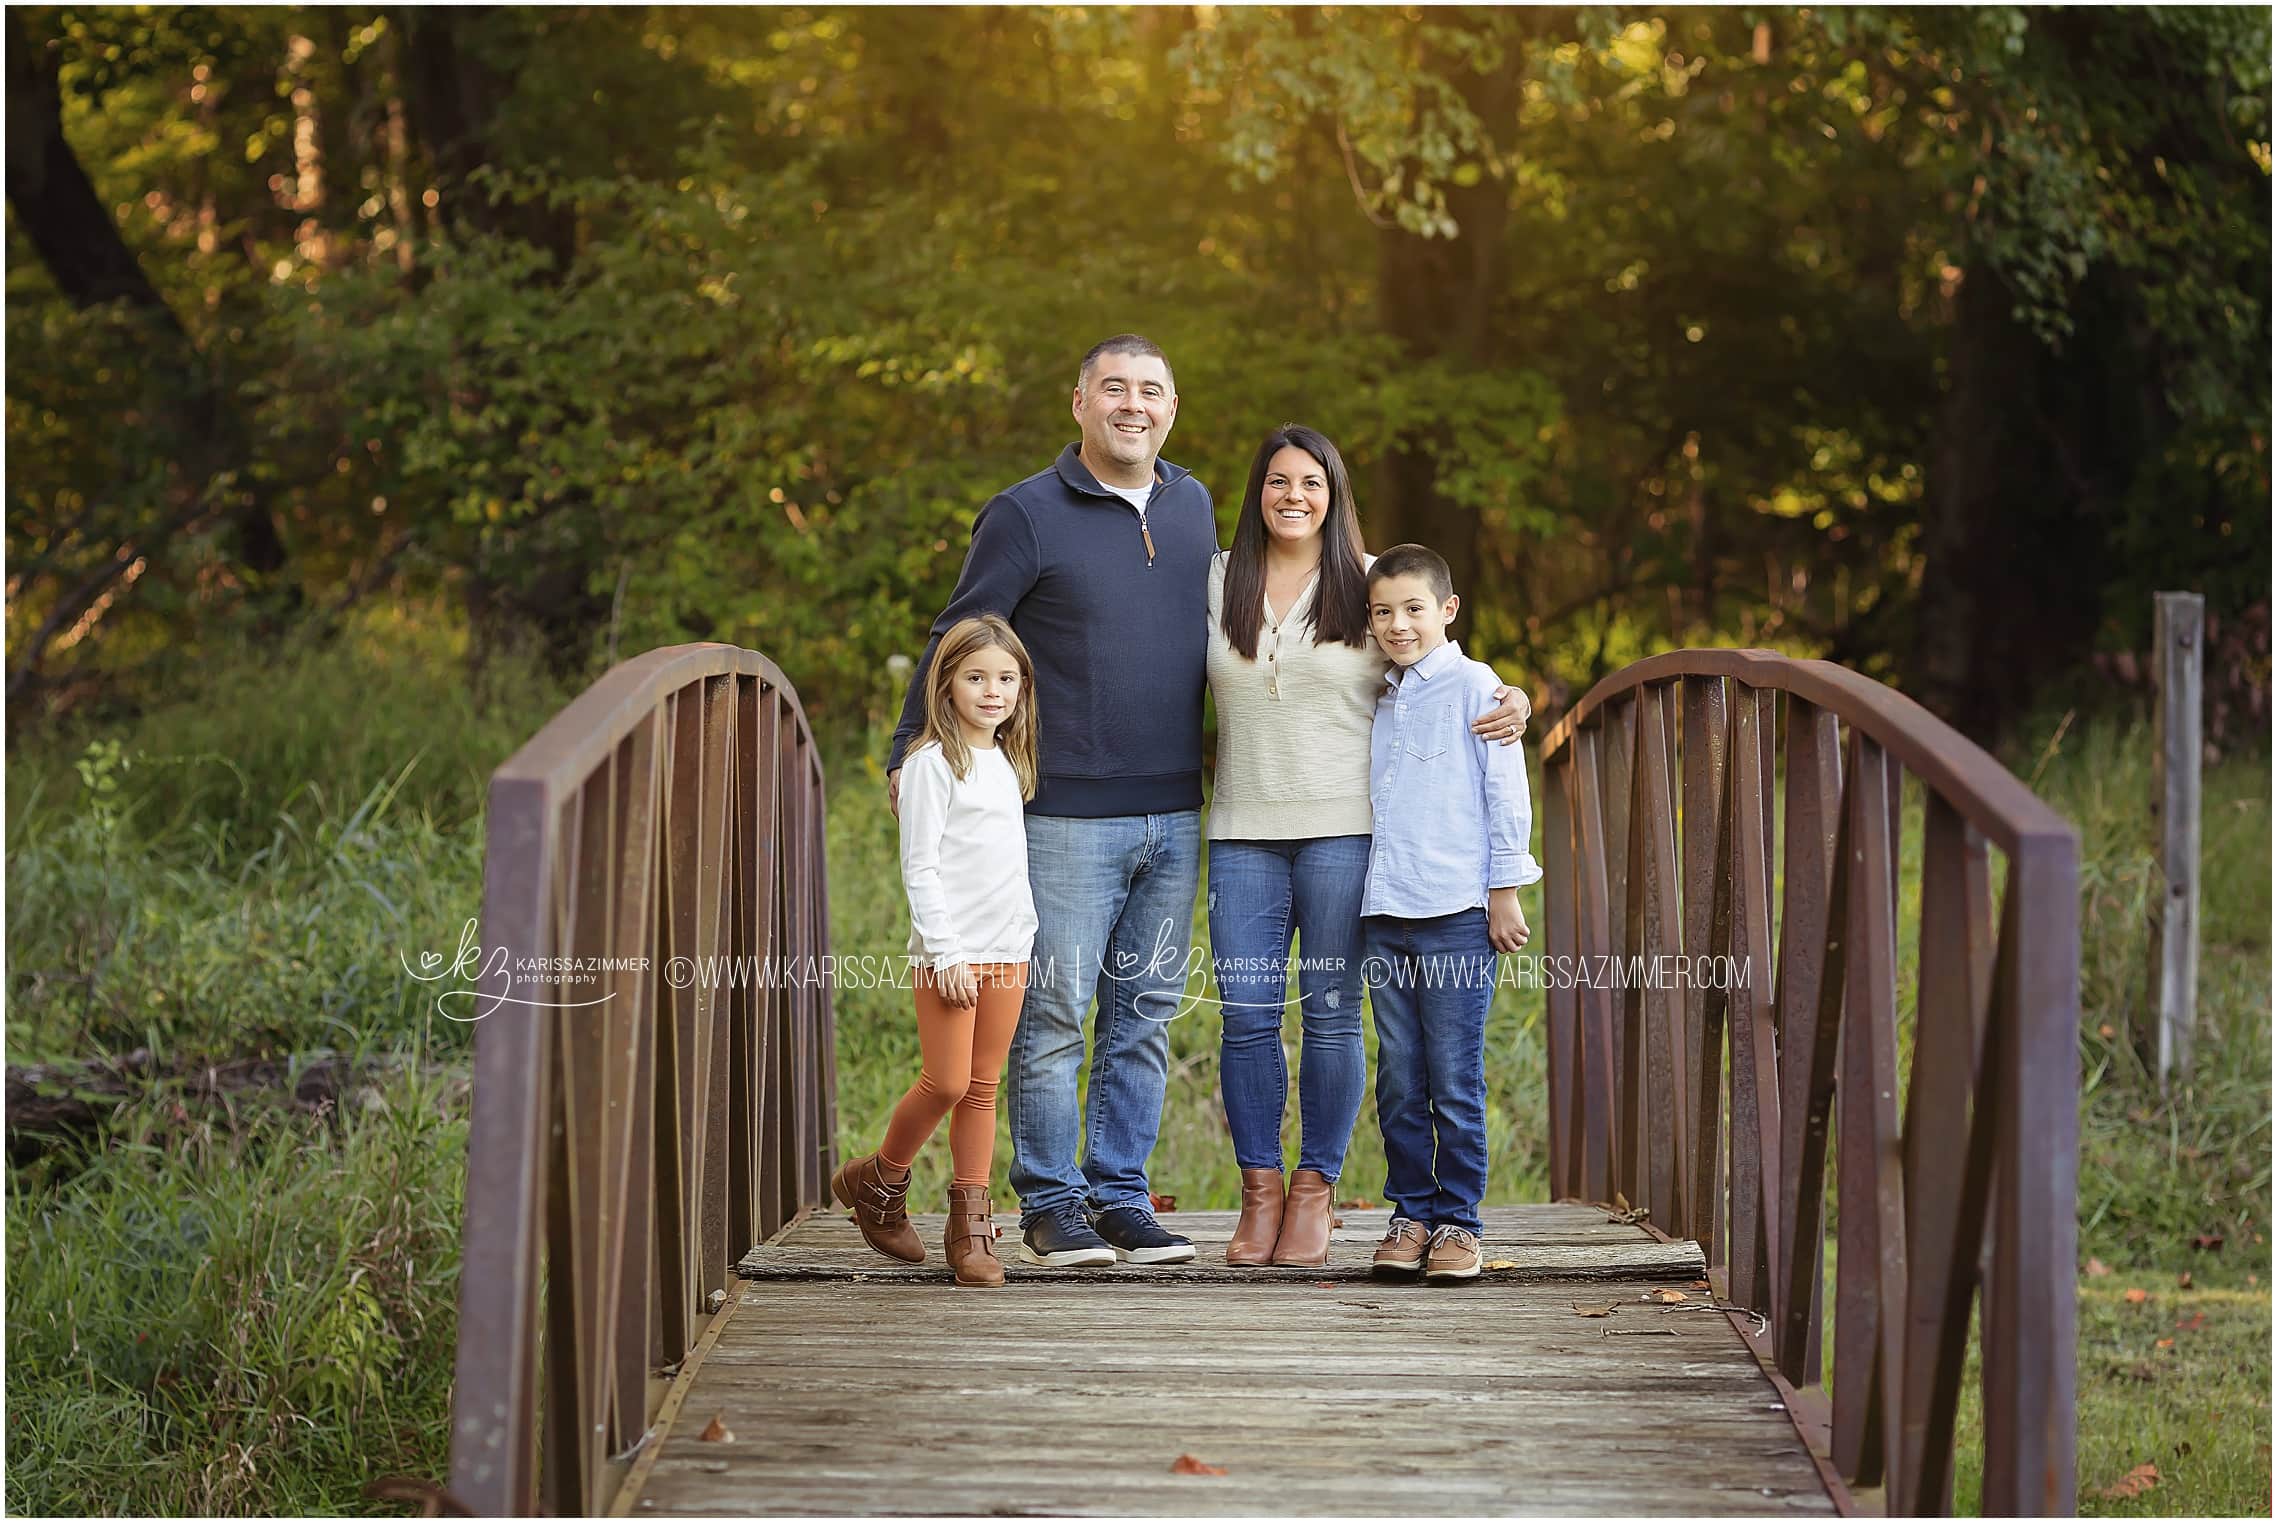 Best Harrisburg Family Photographer captures fall family portraits